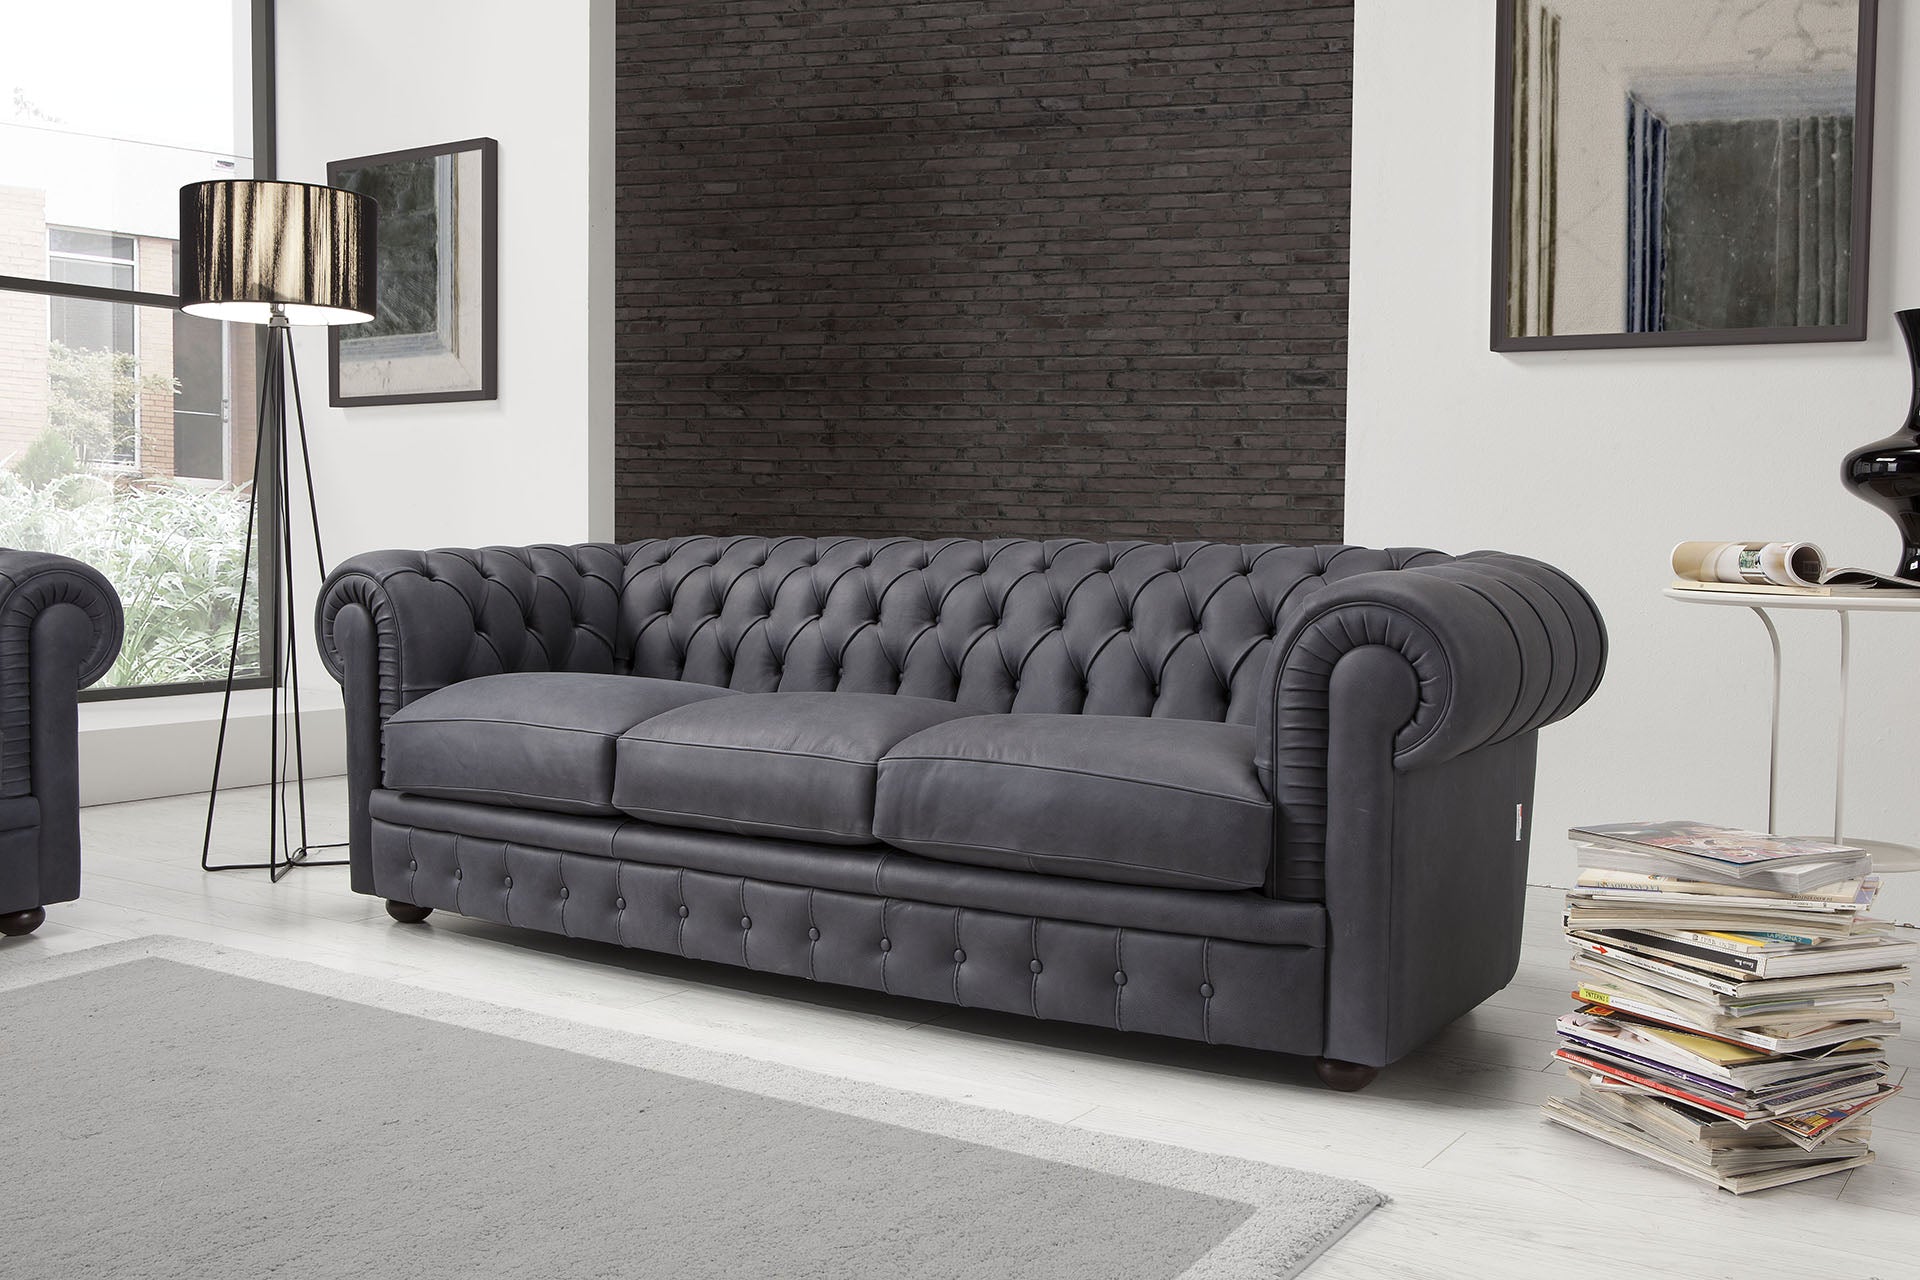 Sir William 3-Seater Leather Sofa